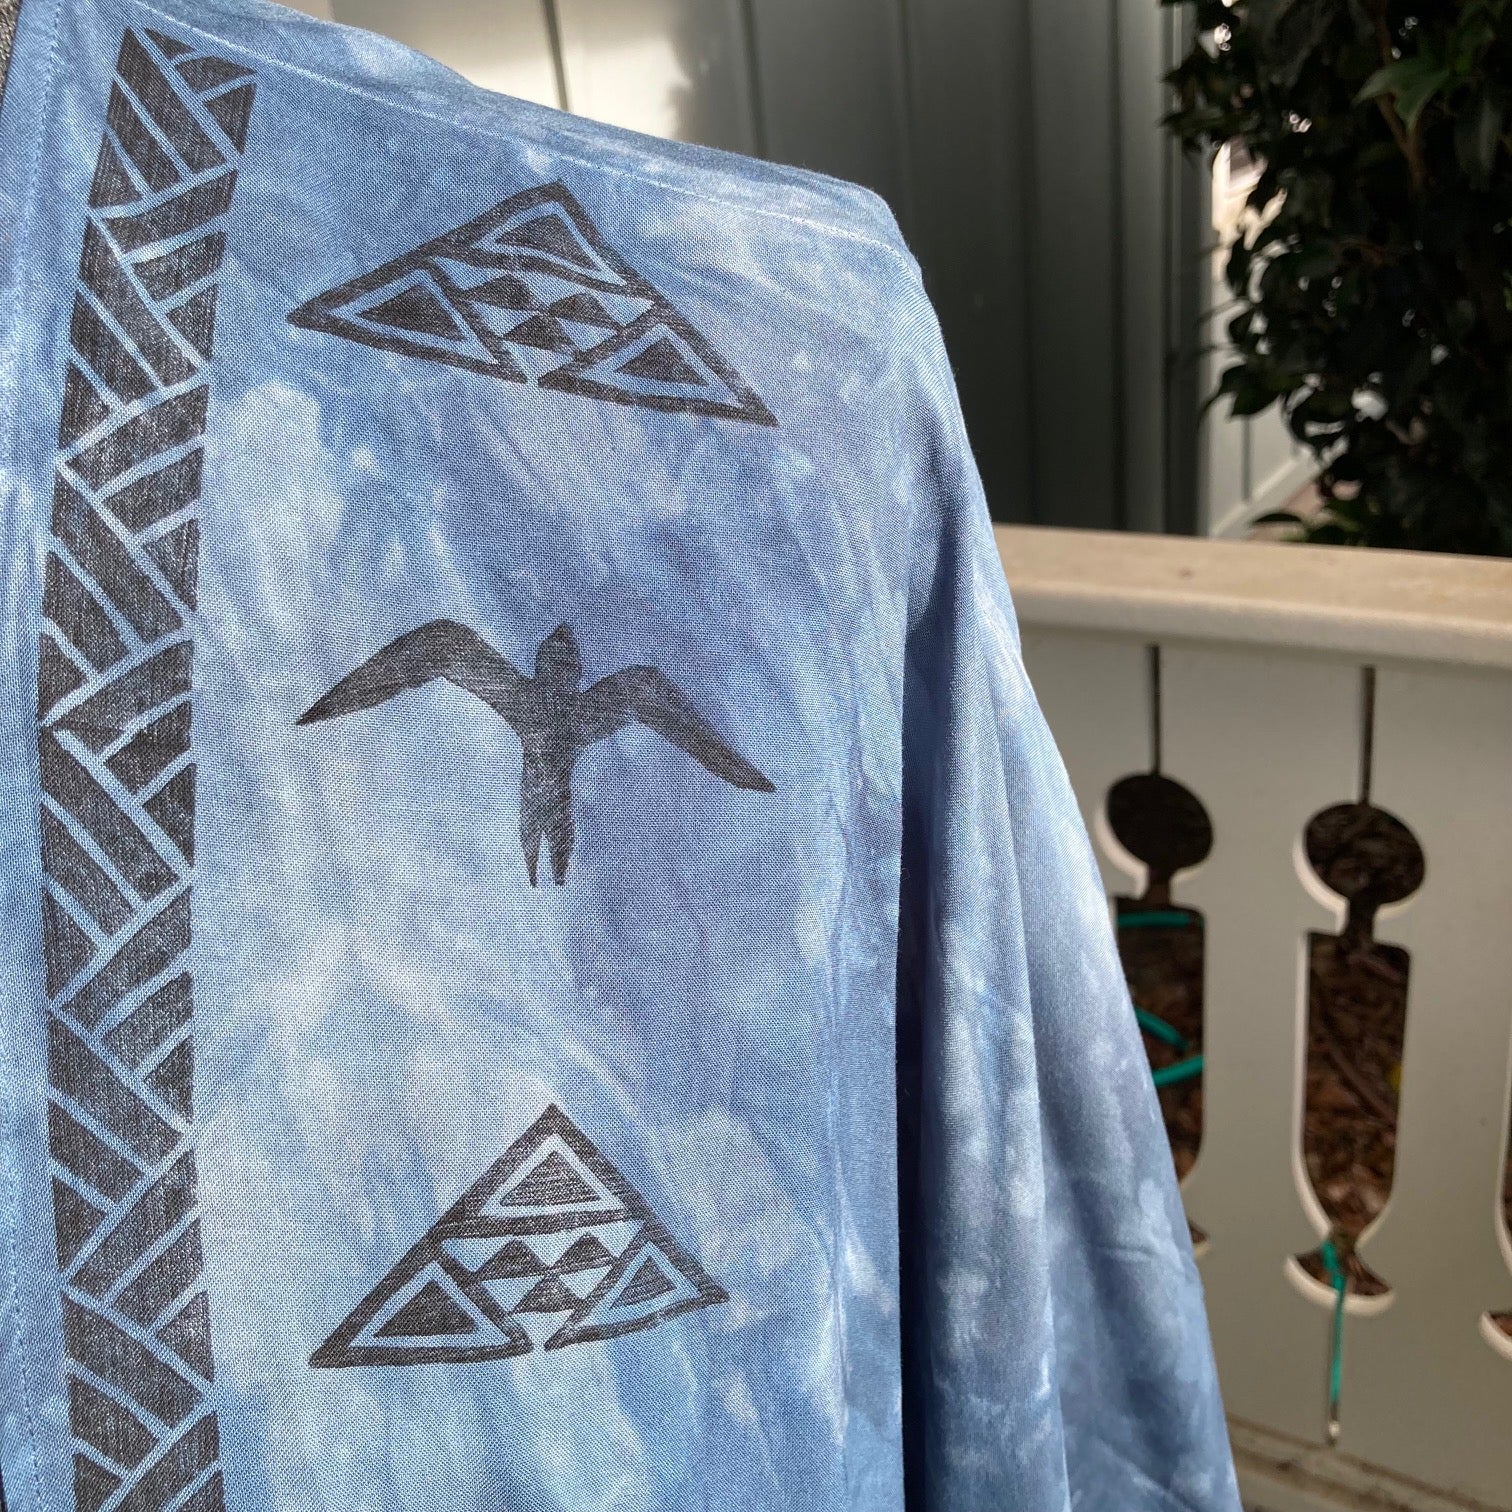 Ohe Kapala Kimono Shrug (KiShrug) In Blue-Gray with the Mauna and 'Iwa